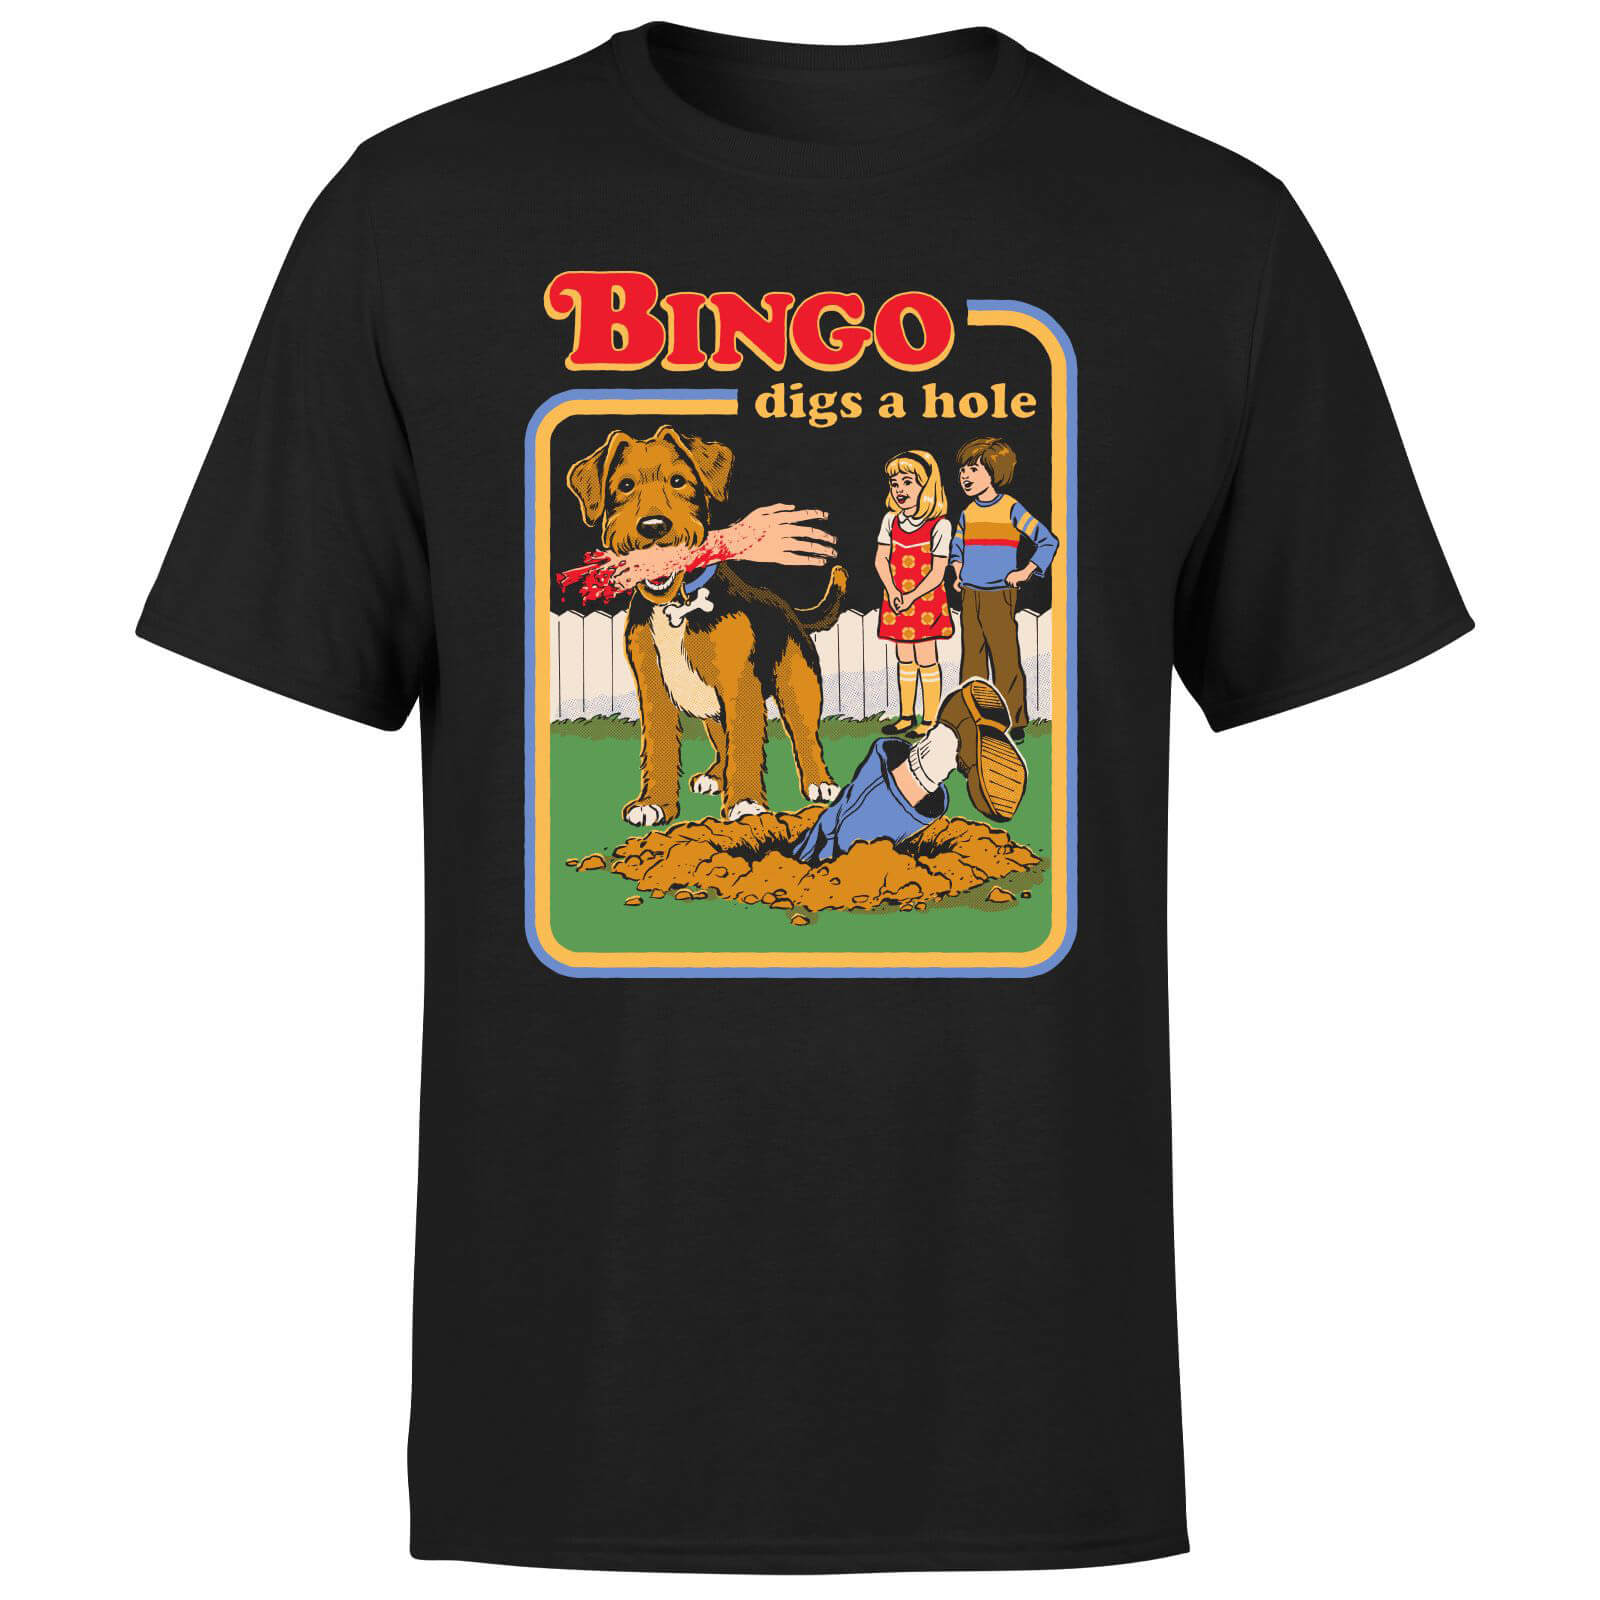 Bingo Digs A Hole Men's T-Shirt - Black - XS - Black